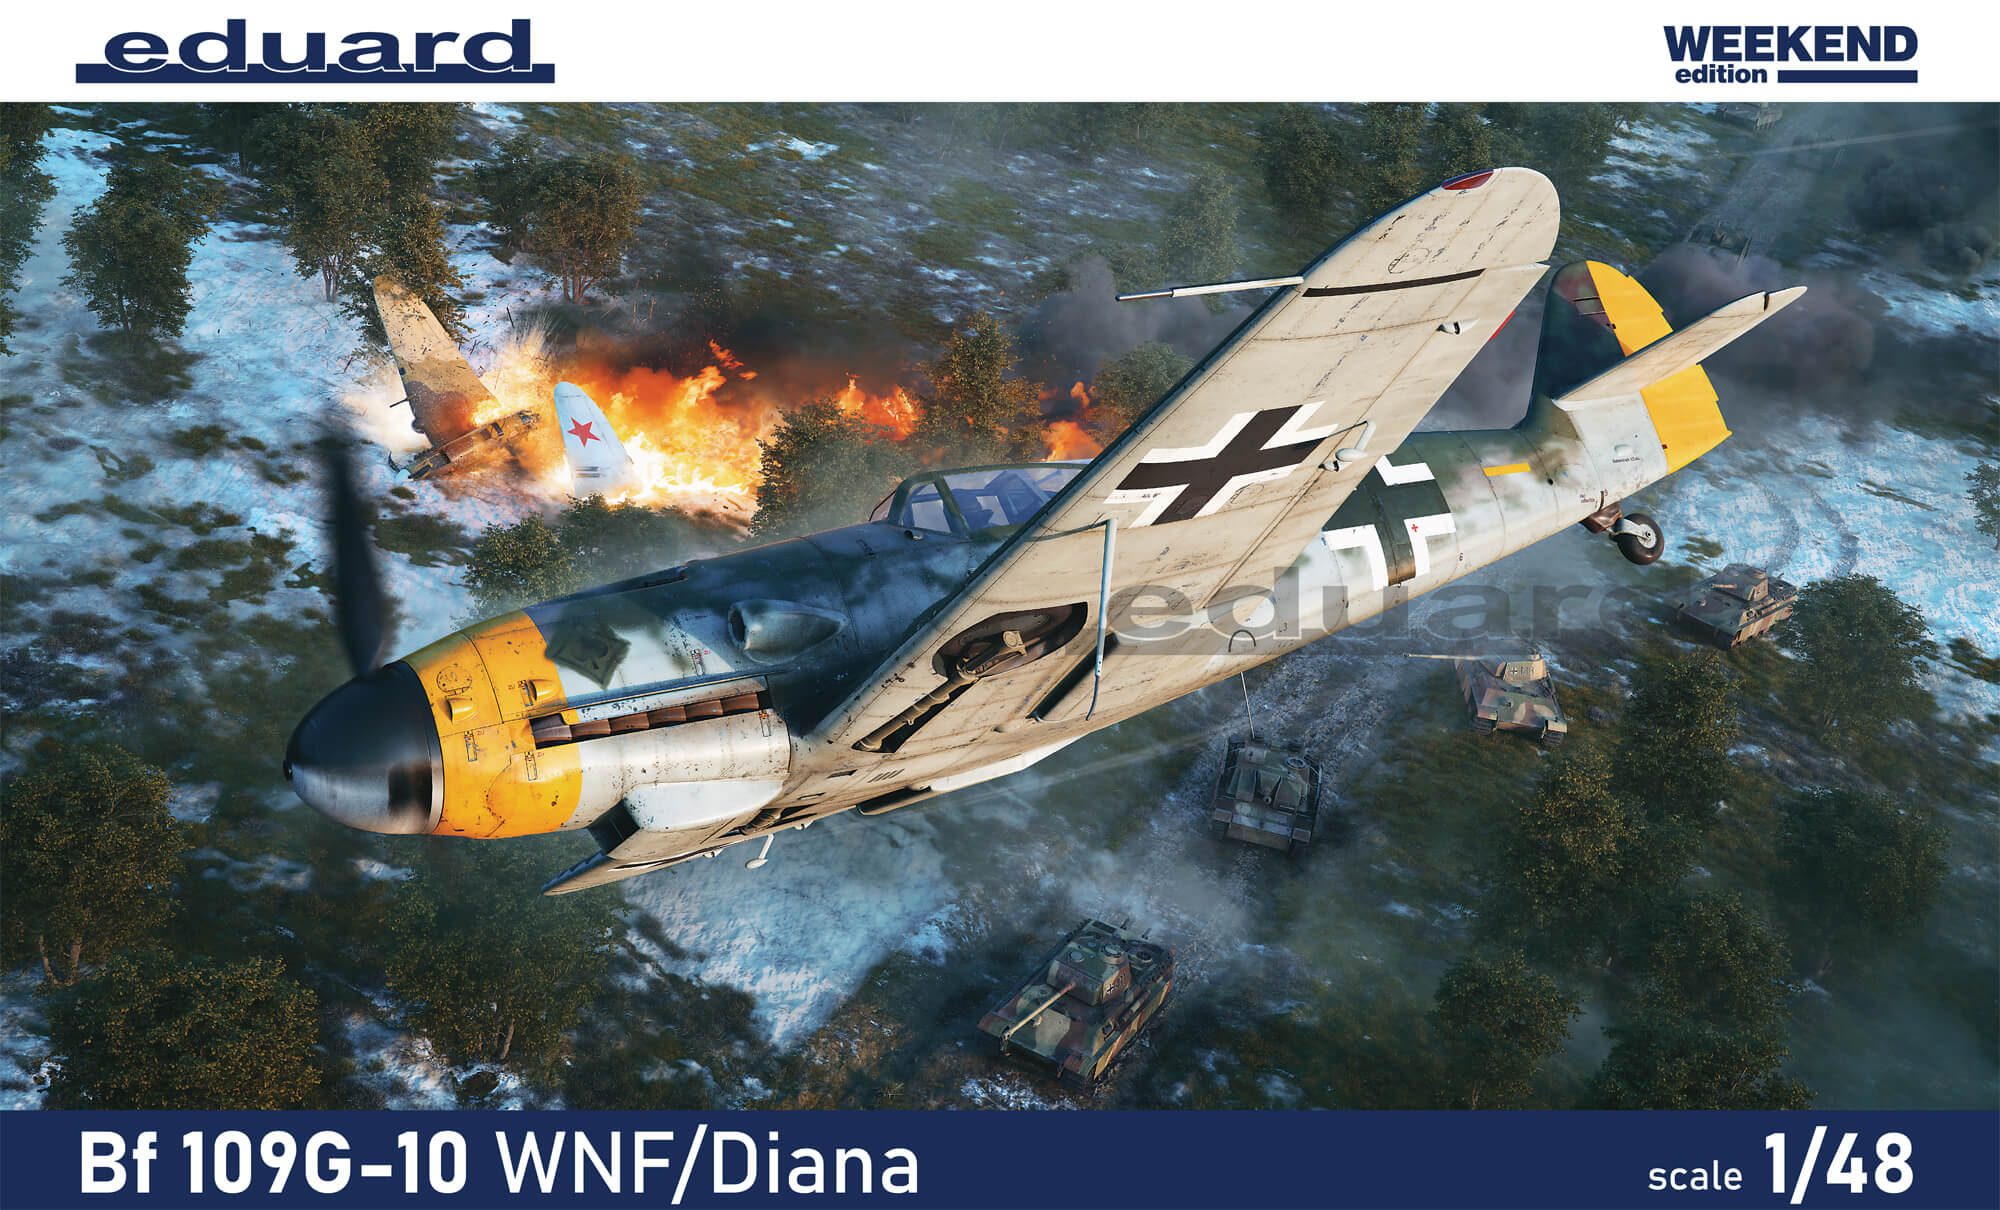 1/48 Bf 109G-10 WNF/Diana (Weekend edition)